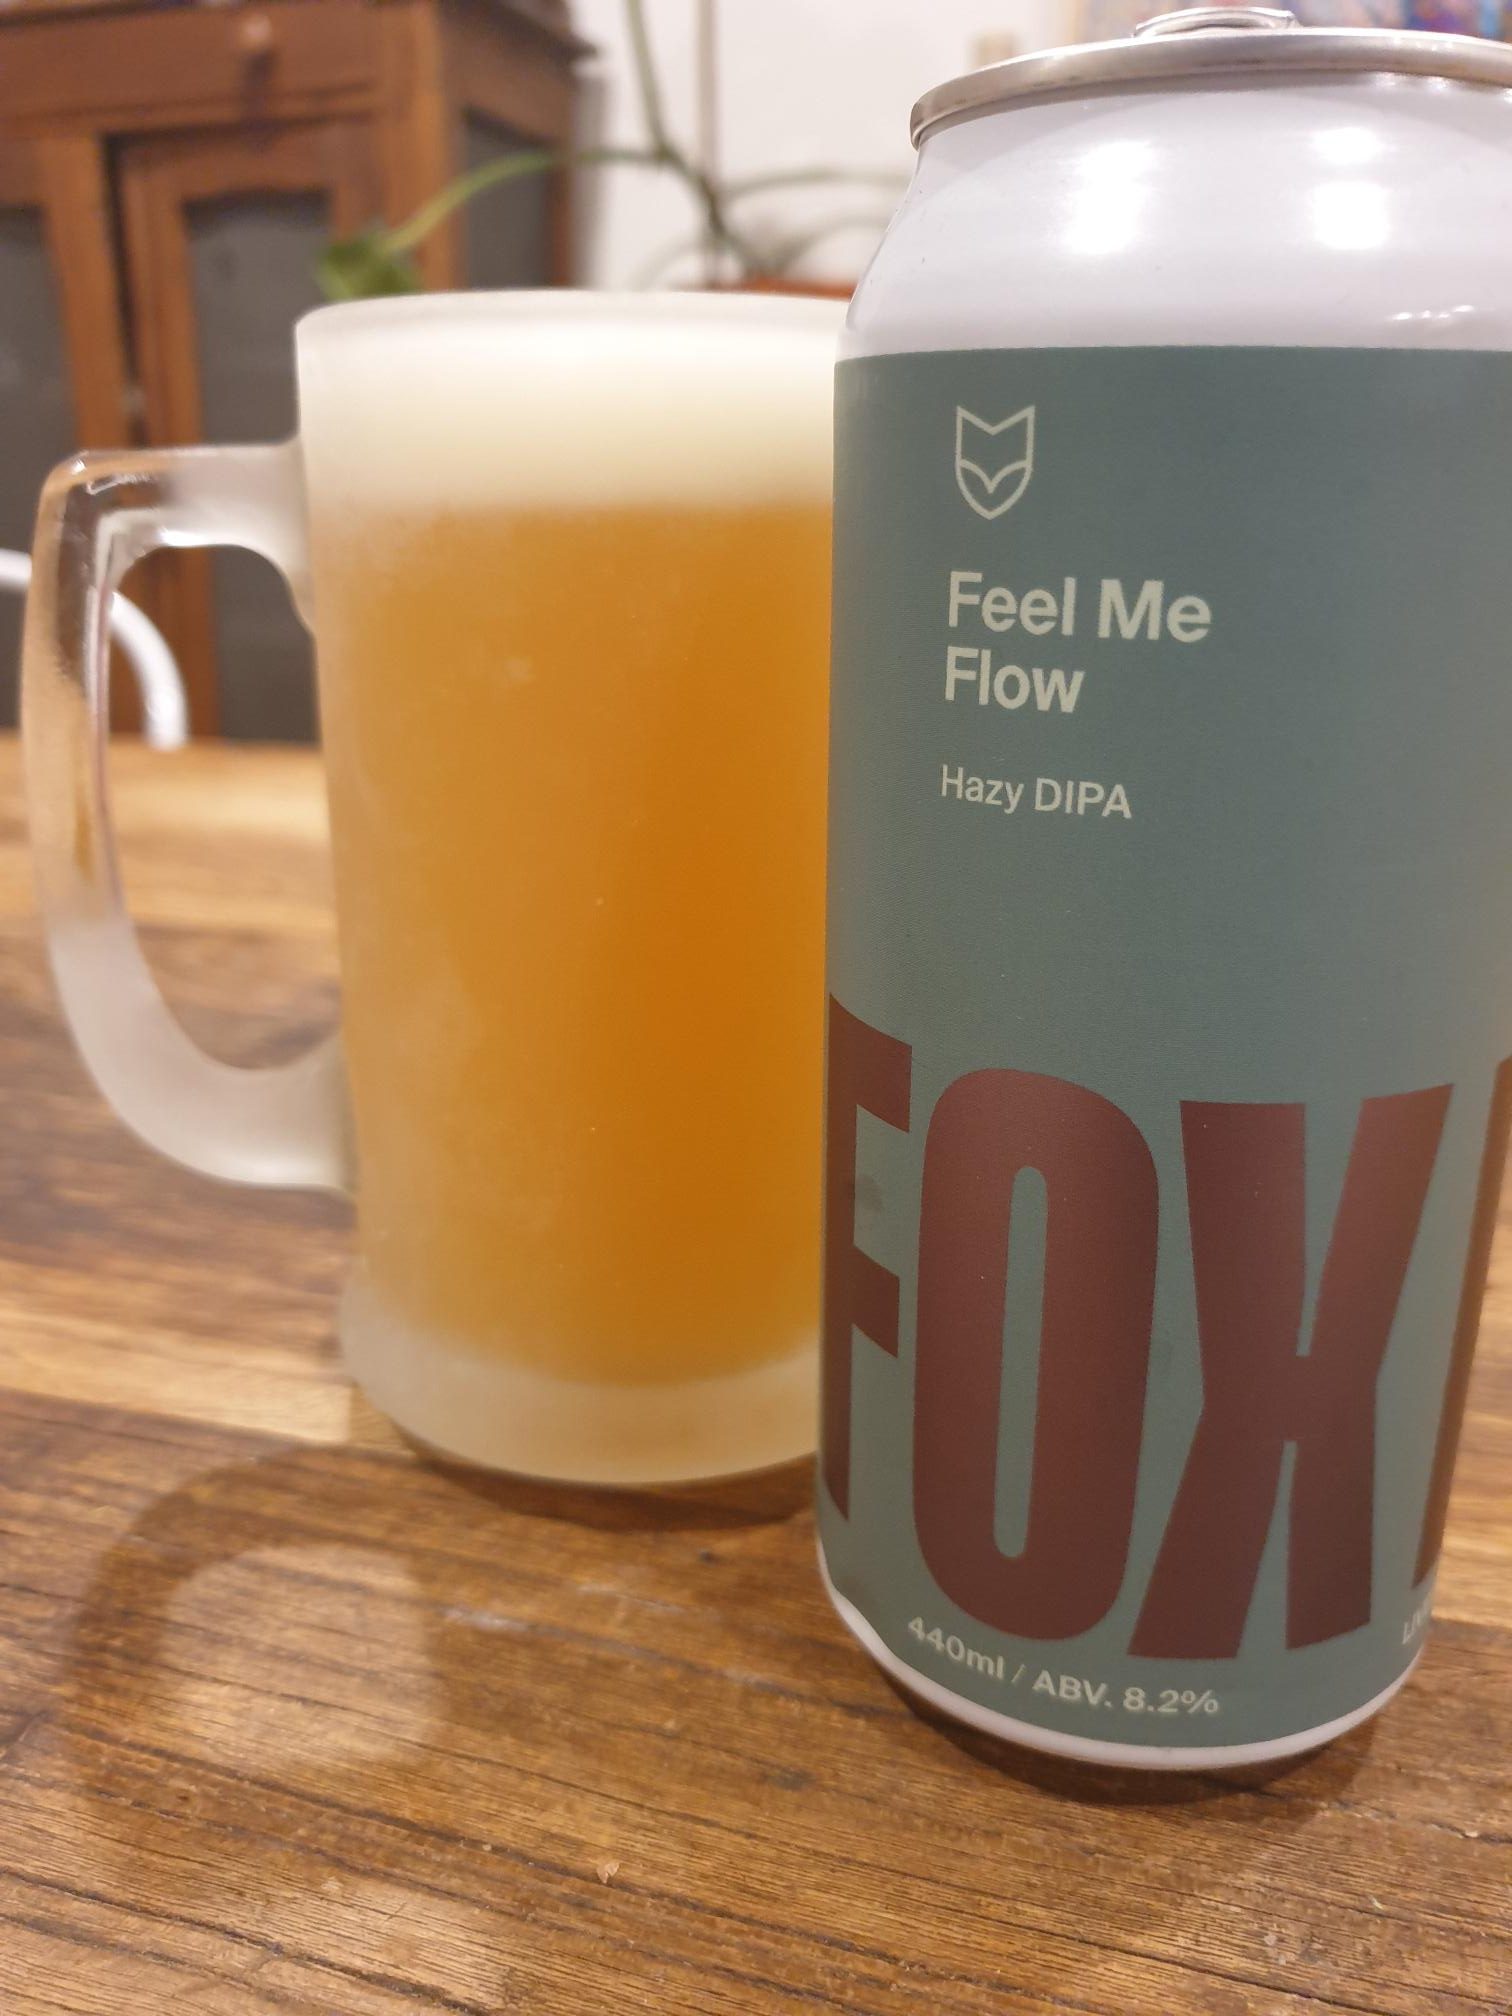 Feel Me Flow Hazy DIPA by Fox Friday Craft Brewery